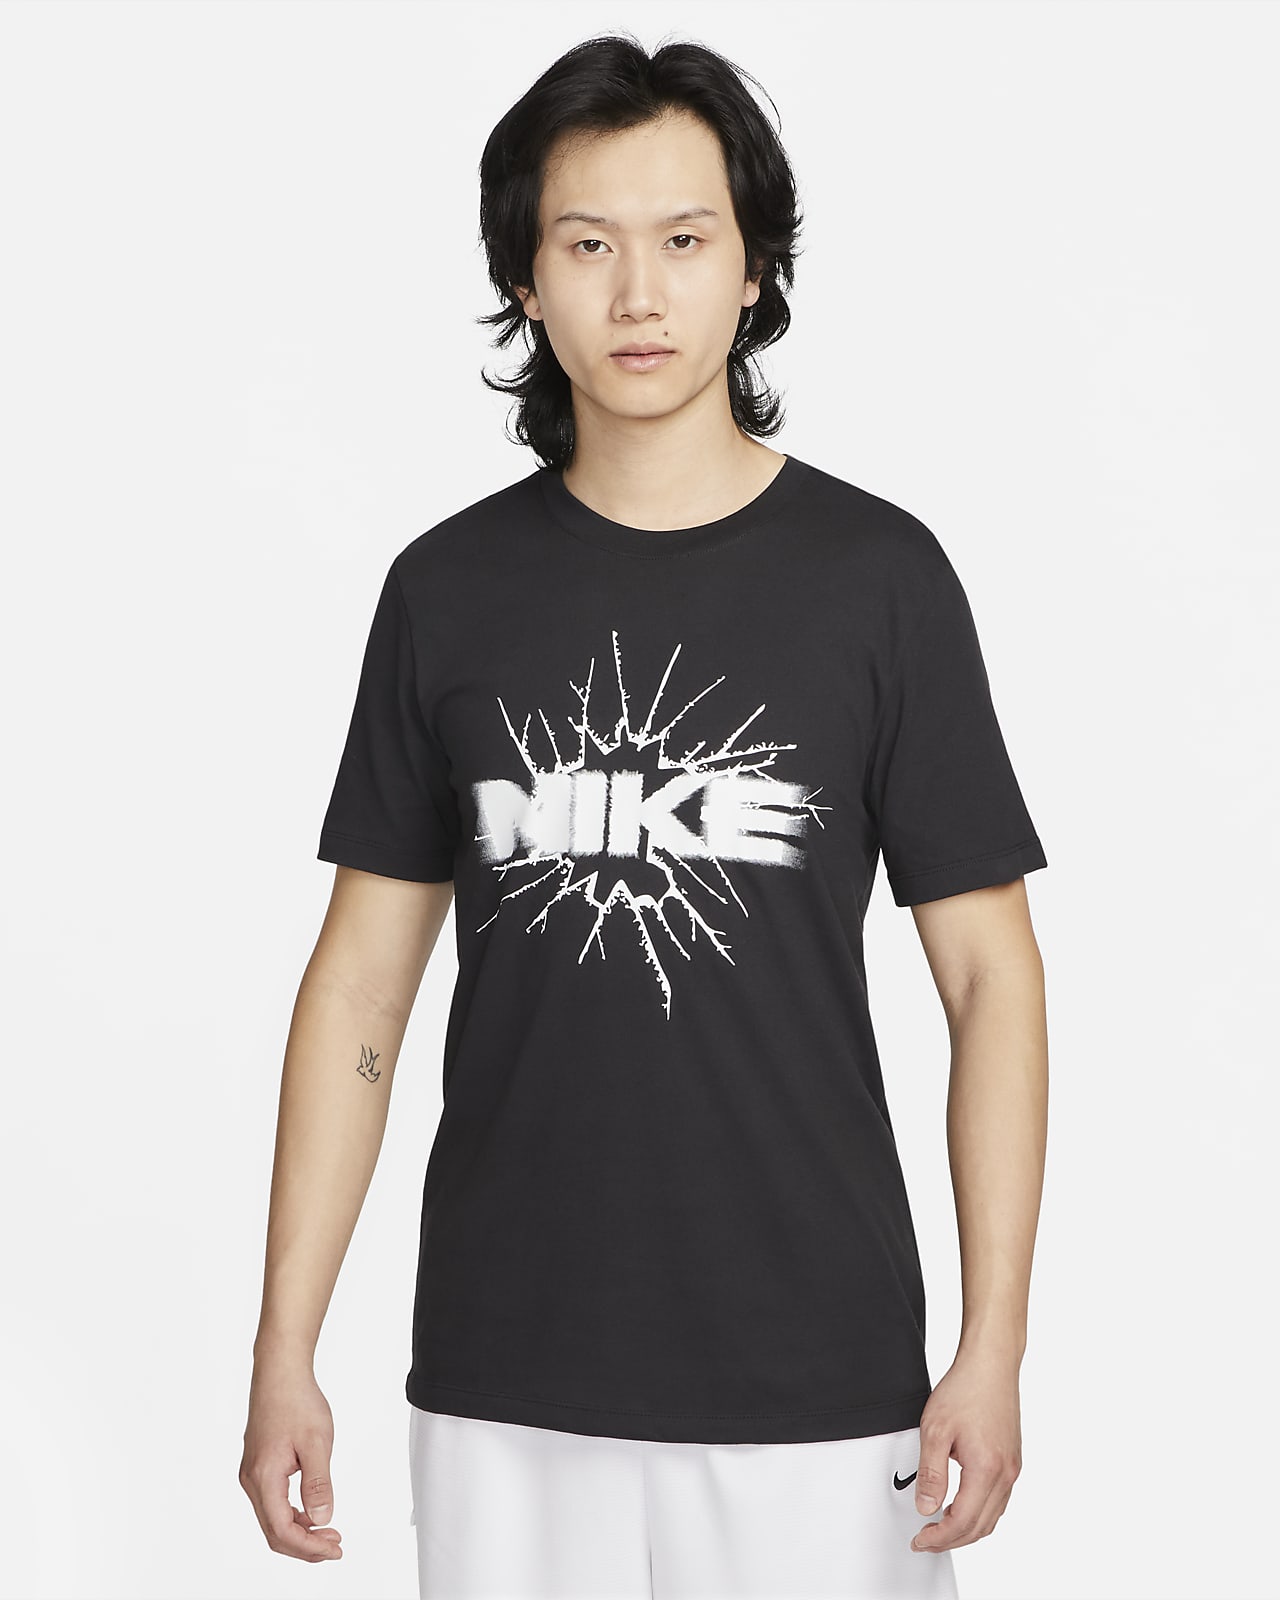 Men's T-Shirt. Nike JP